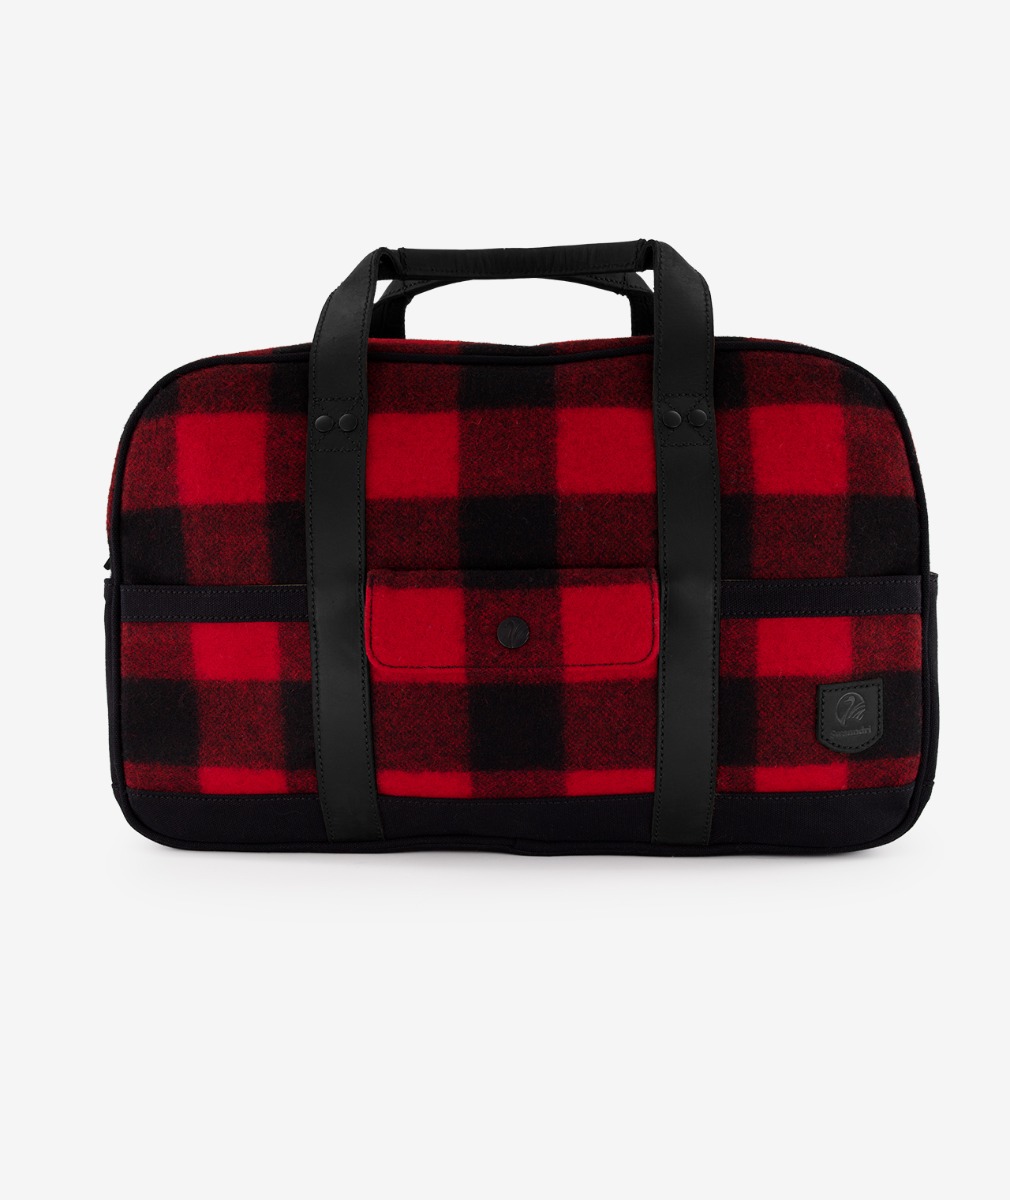 Swanndri Kingston Overnighter Bag in Red/Black Check